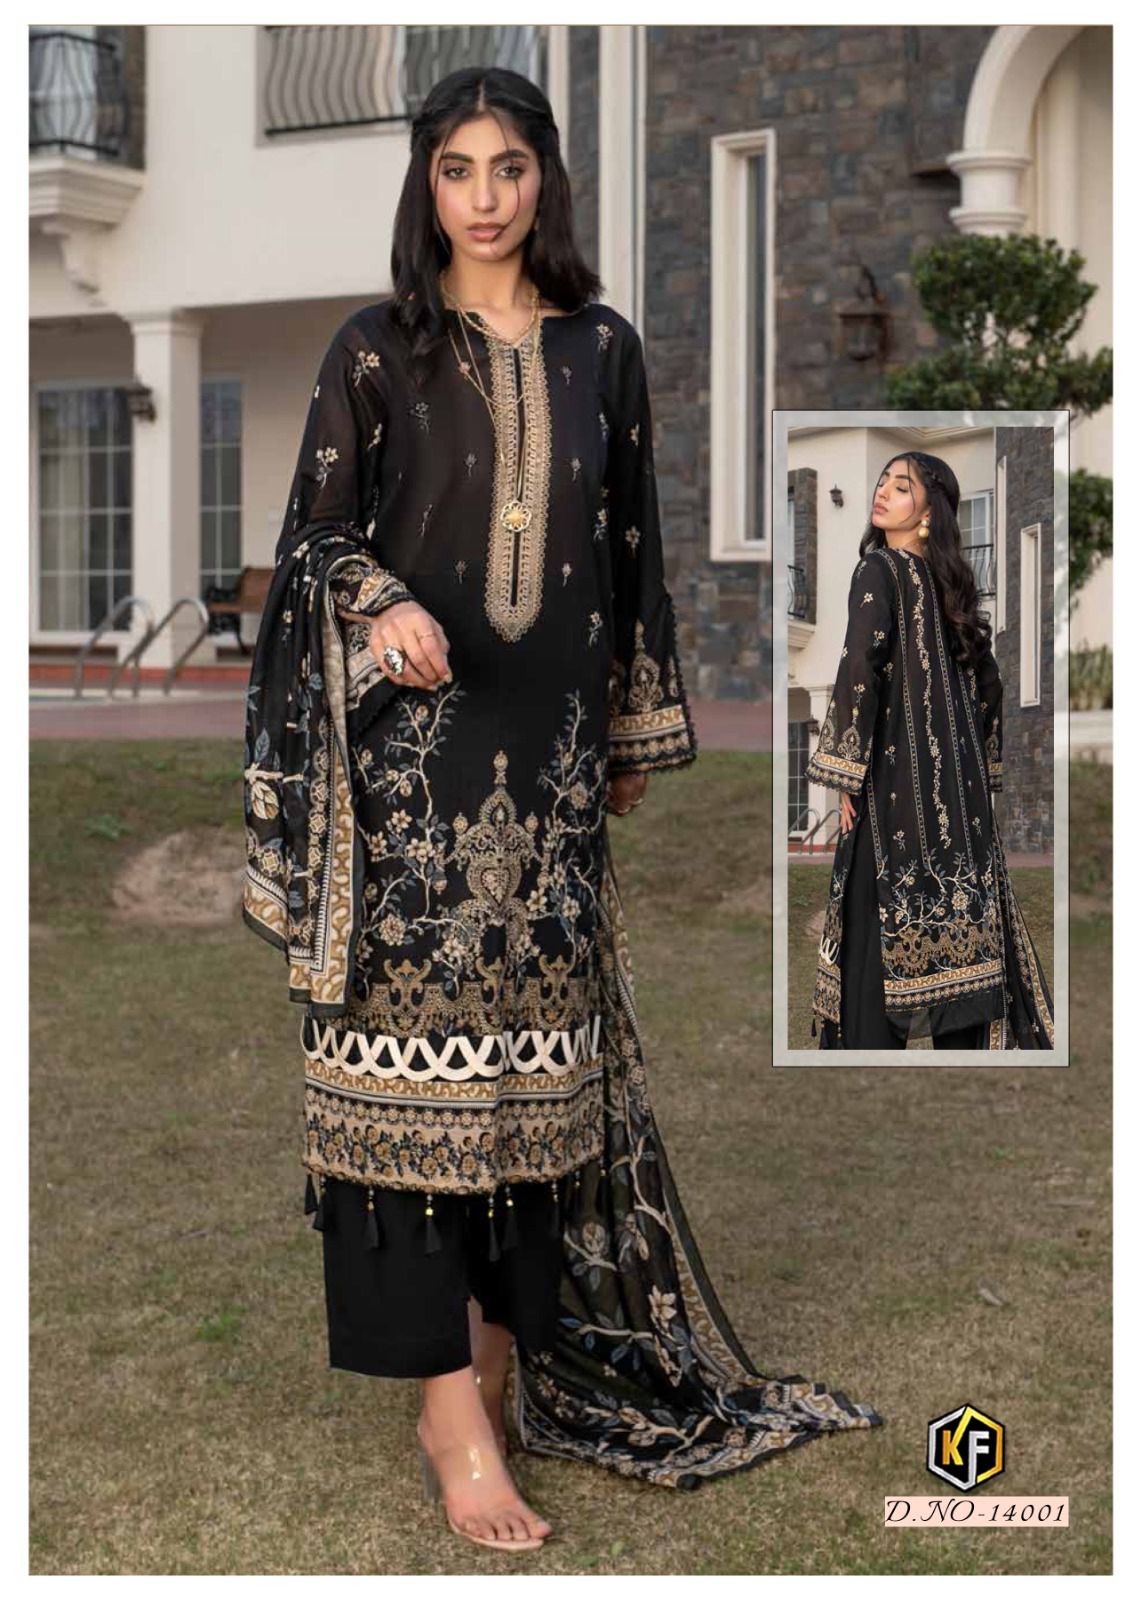 Charizma Vol 14 Keval Fab Cotton Karachi Salwar Suits